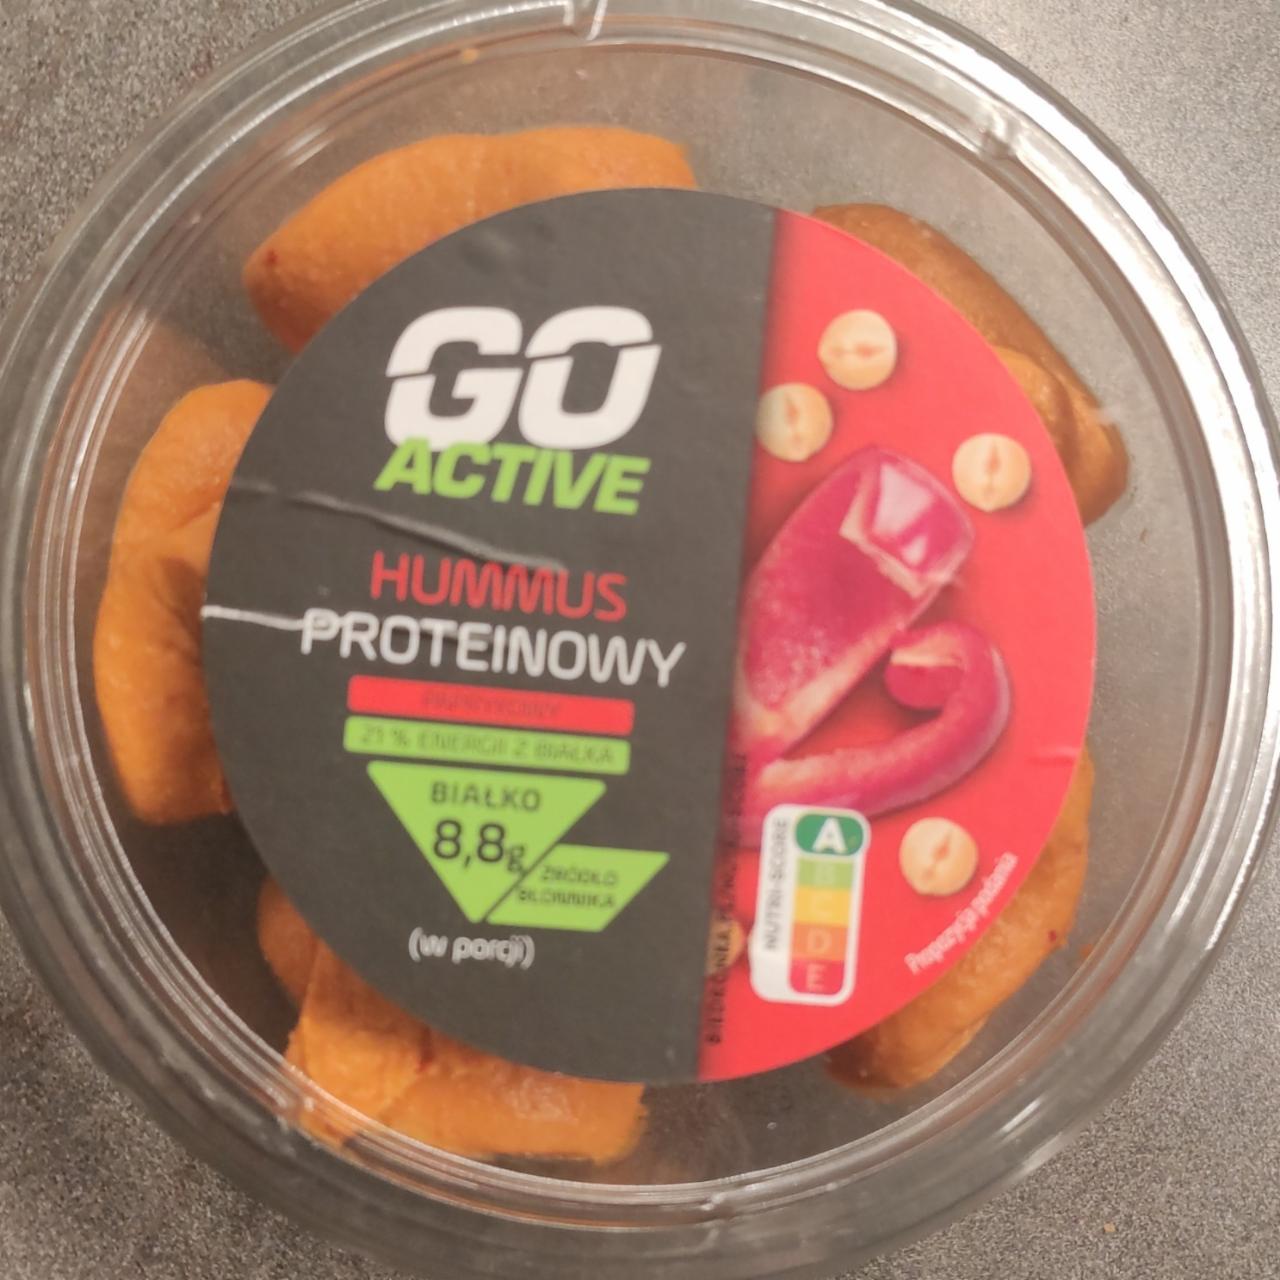 Fotografie - Hummus proteinowy Go Active